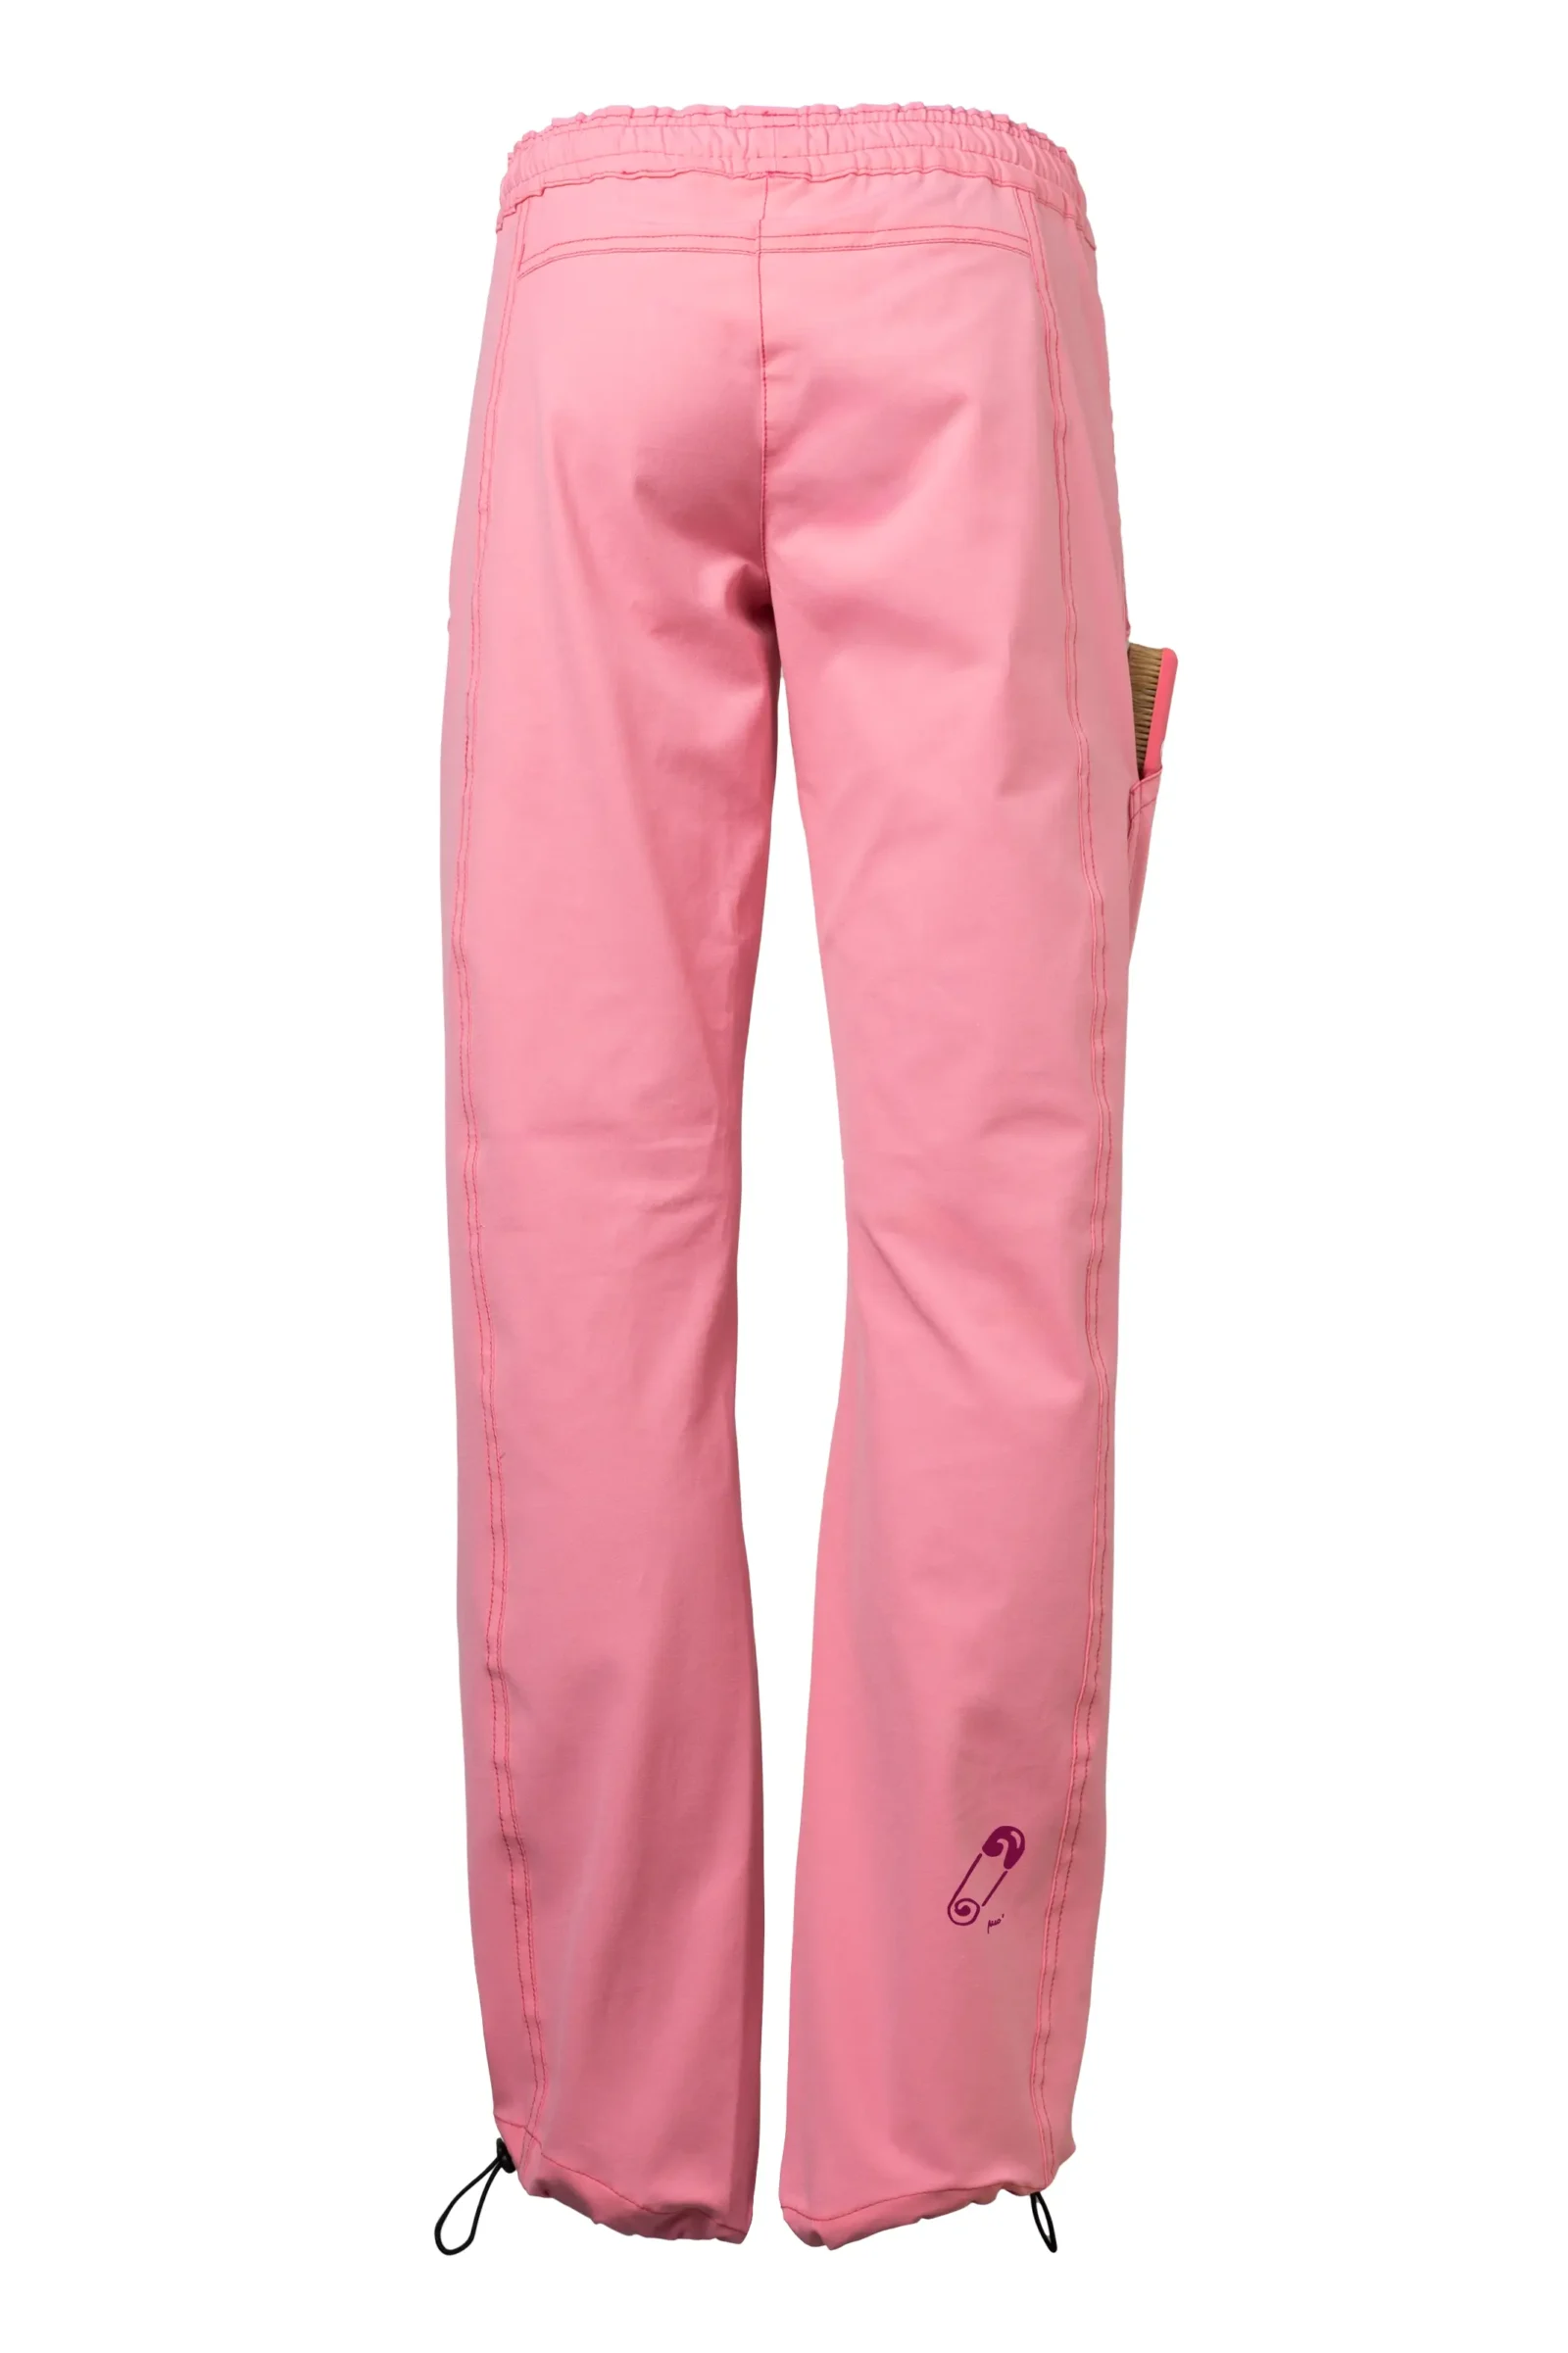 pantalon escalade sportive femme - rose fluo - coton stretch - pin graphics - VIOLET MONVIC